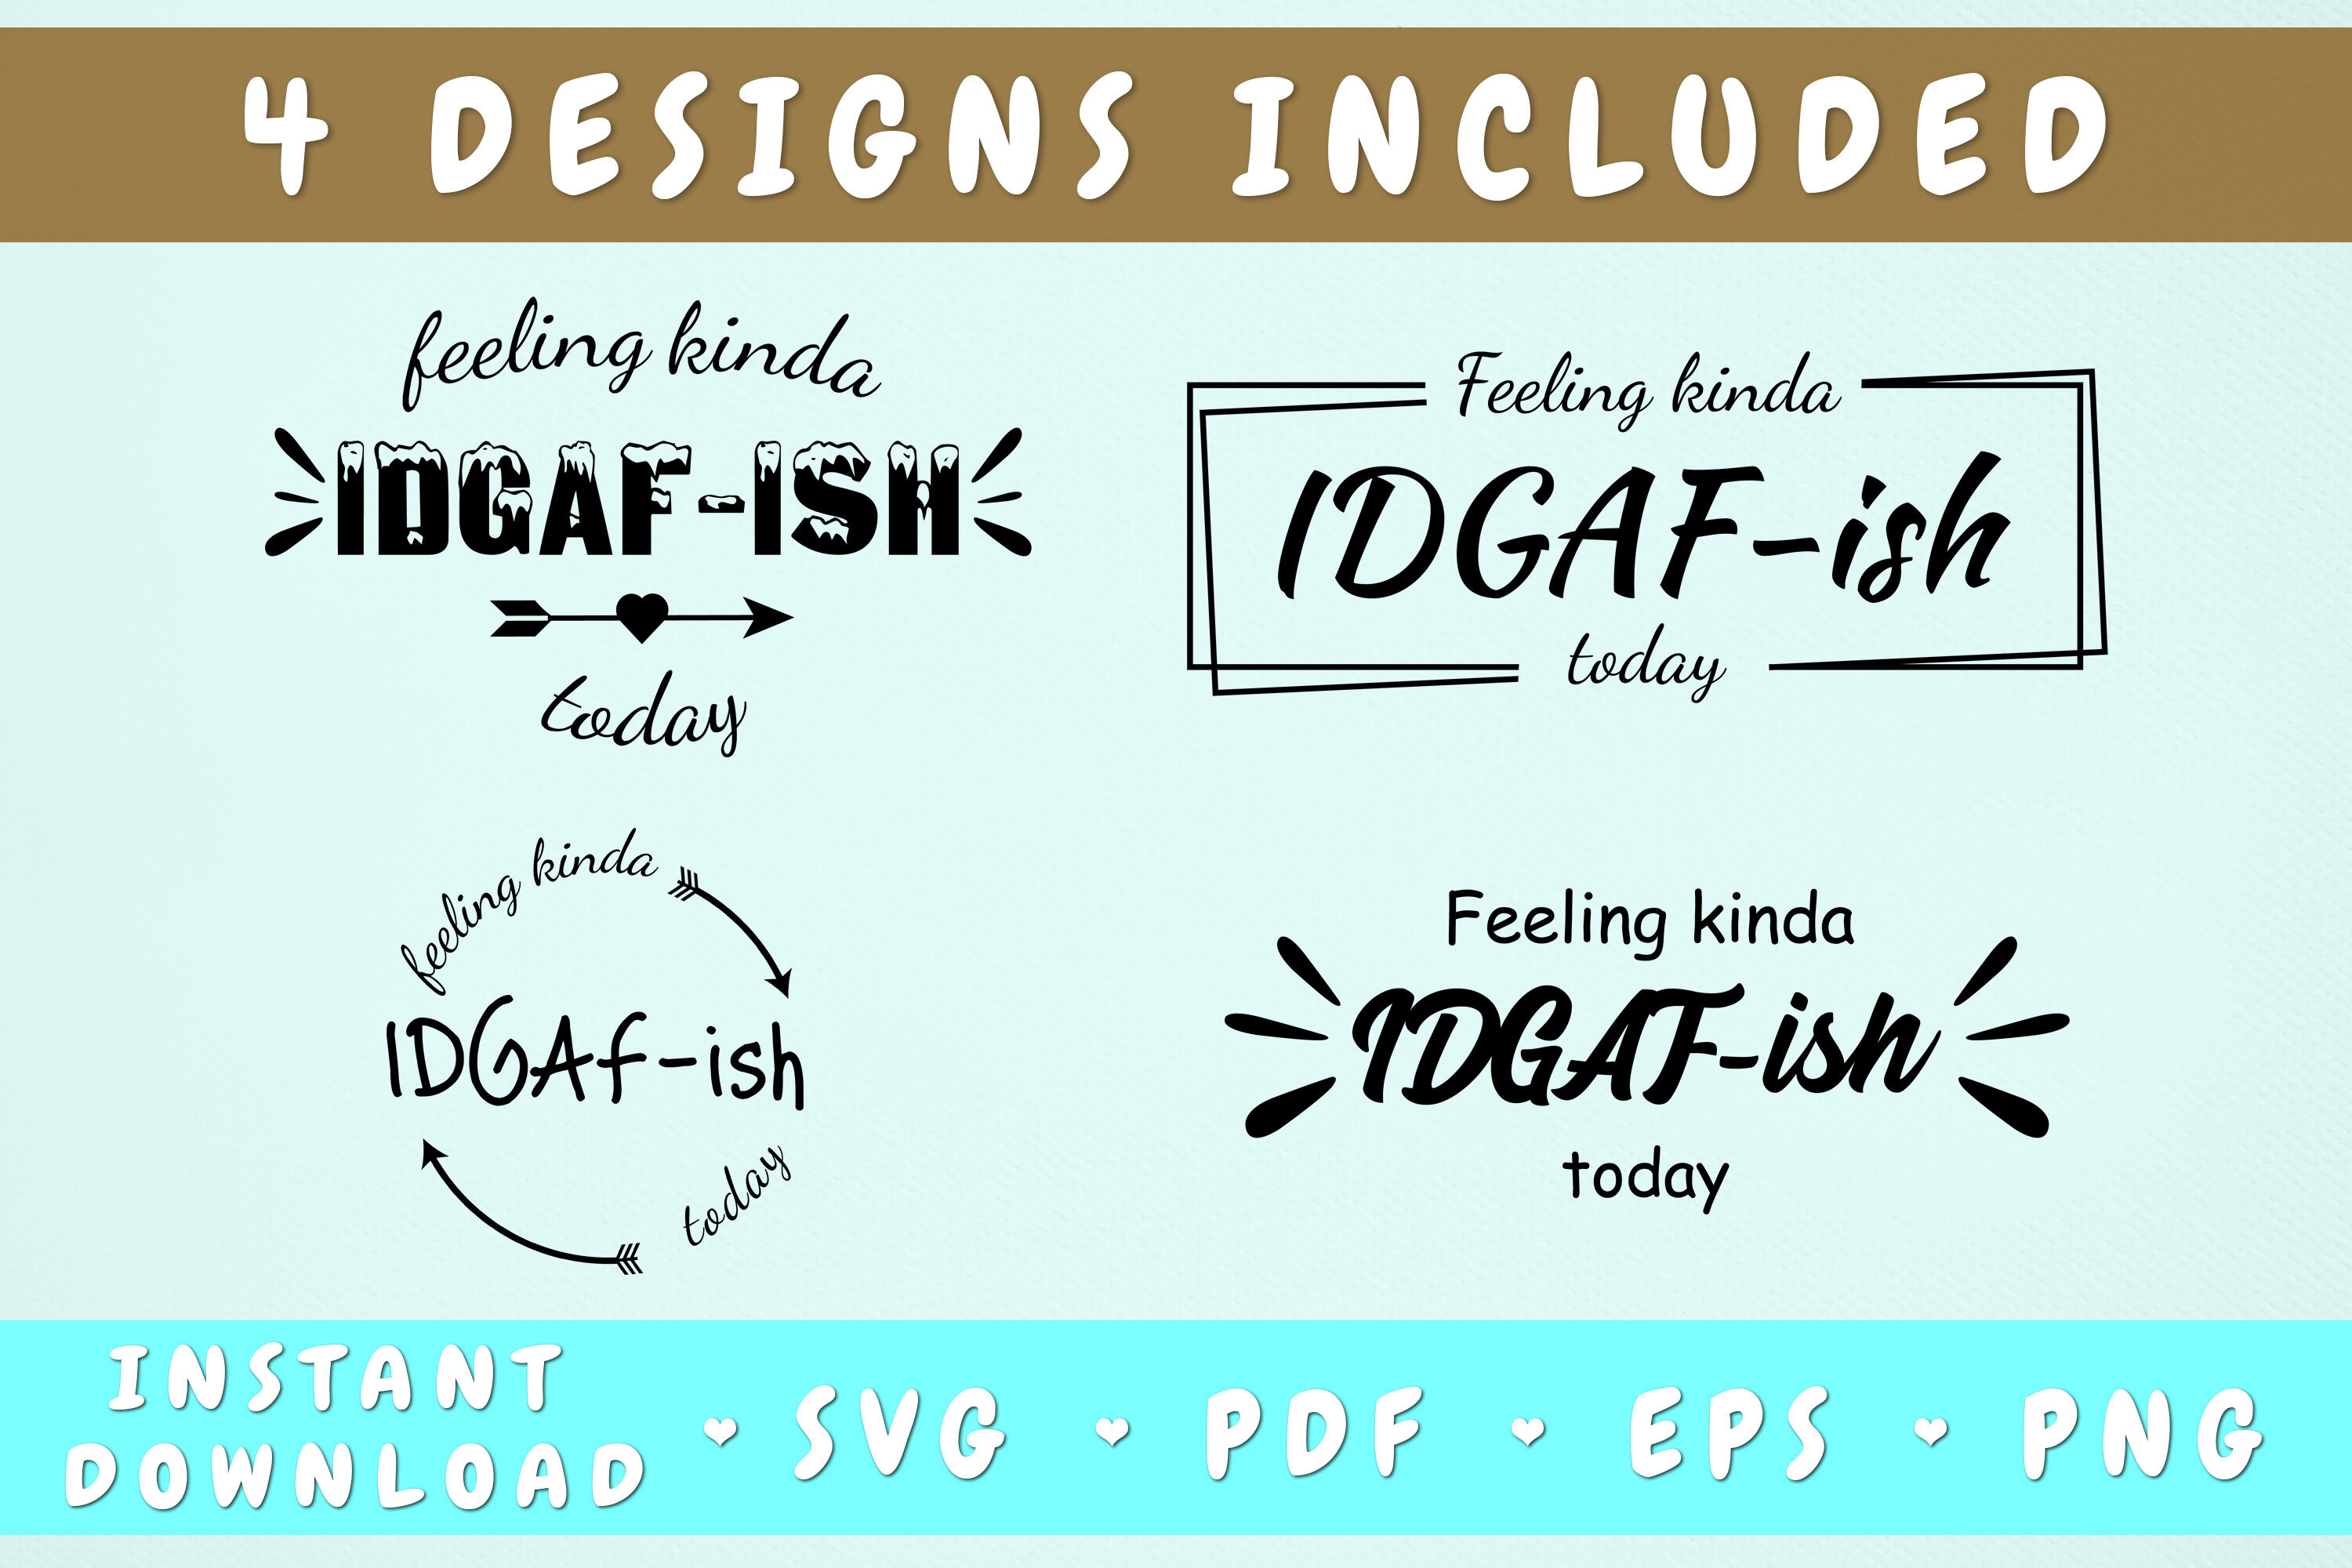 Download Feeling Kinda IDGAF-ish Today SVG - 4 Designs By ...